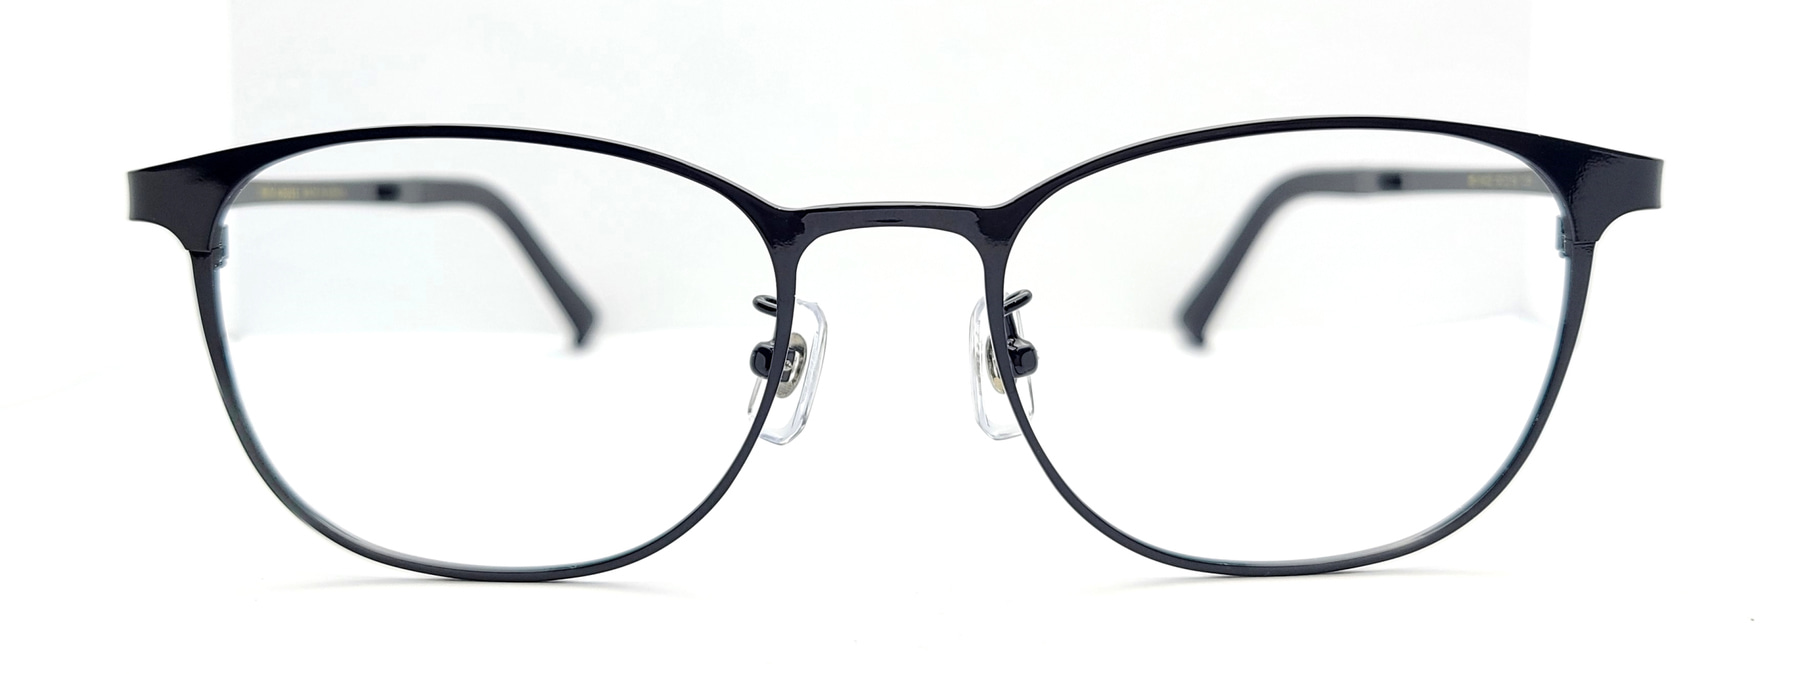 MINIHOUSE M-1402, Korean glasses, sunglasses, eyeglasses, glasses